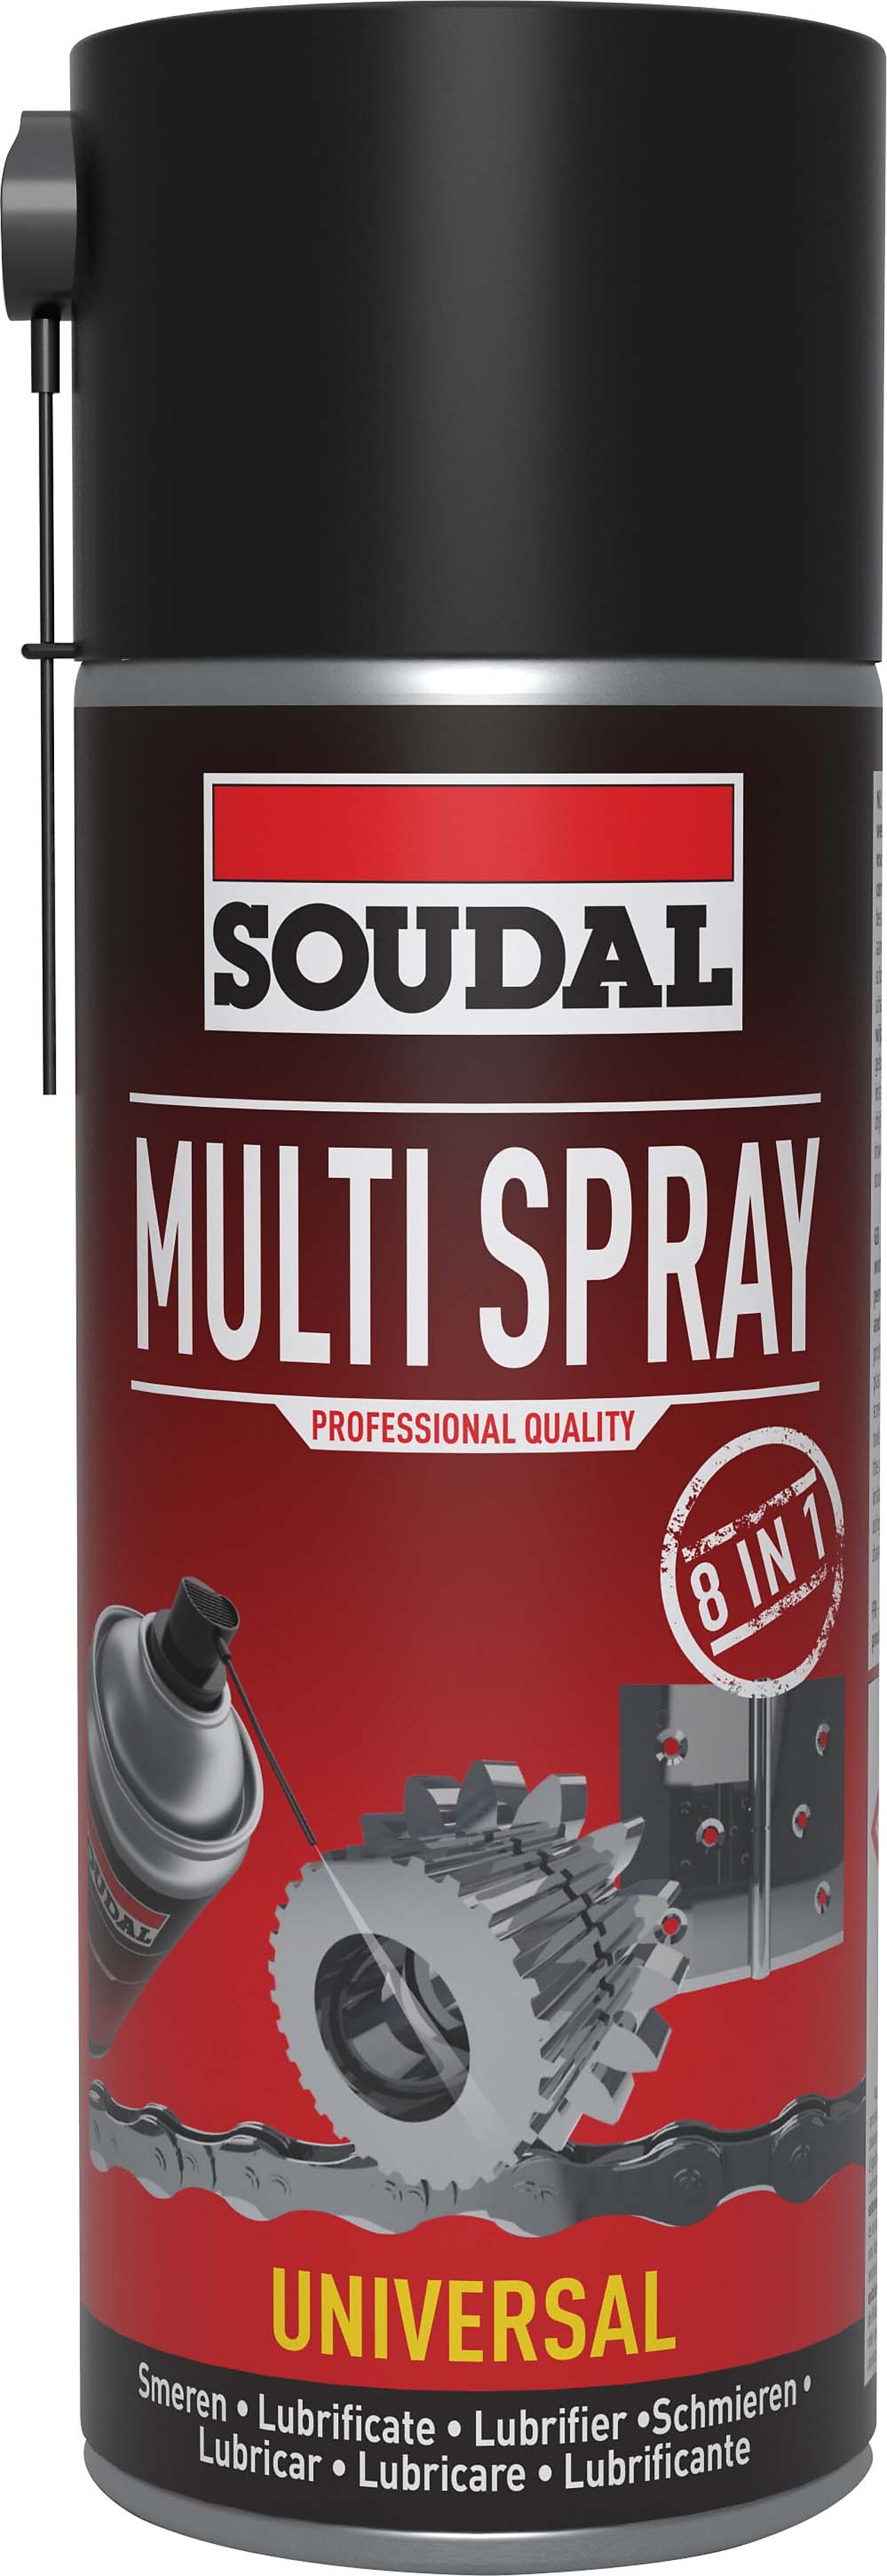 Soudal Soudal multispray 8 i 1, 400 ml 1